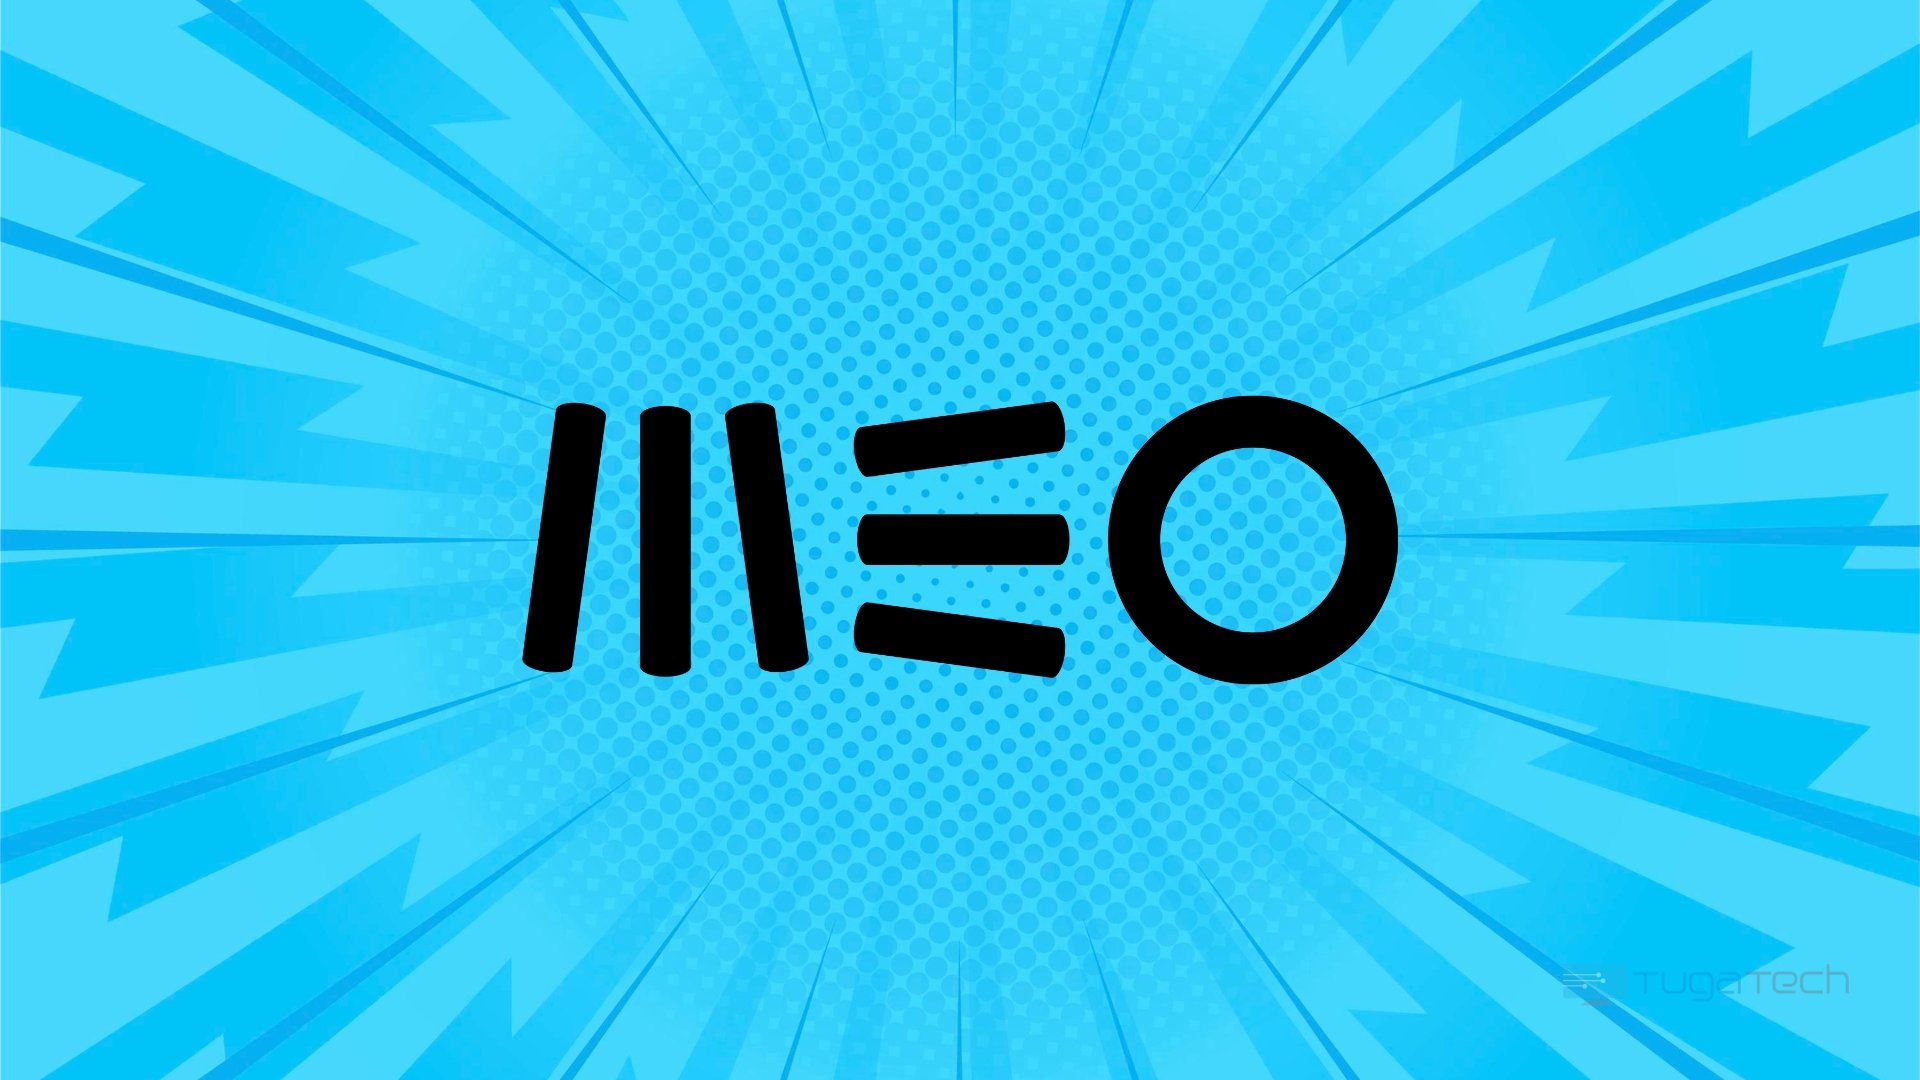 MEO logo